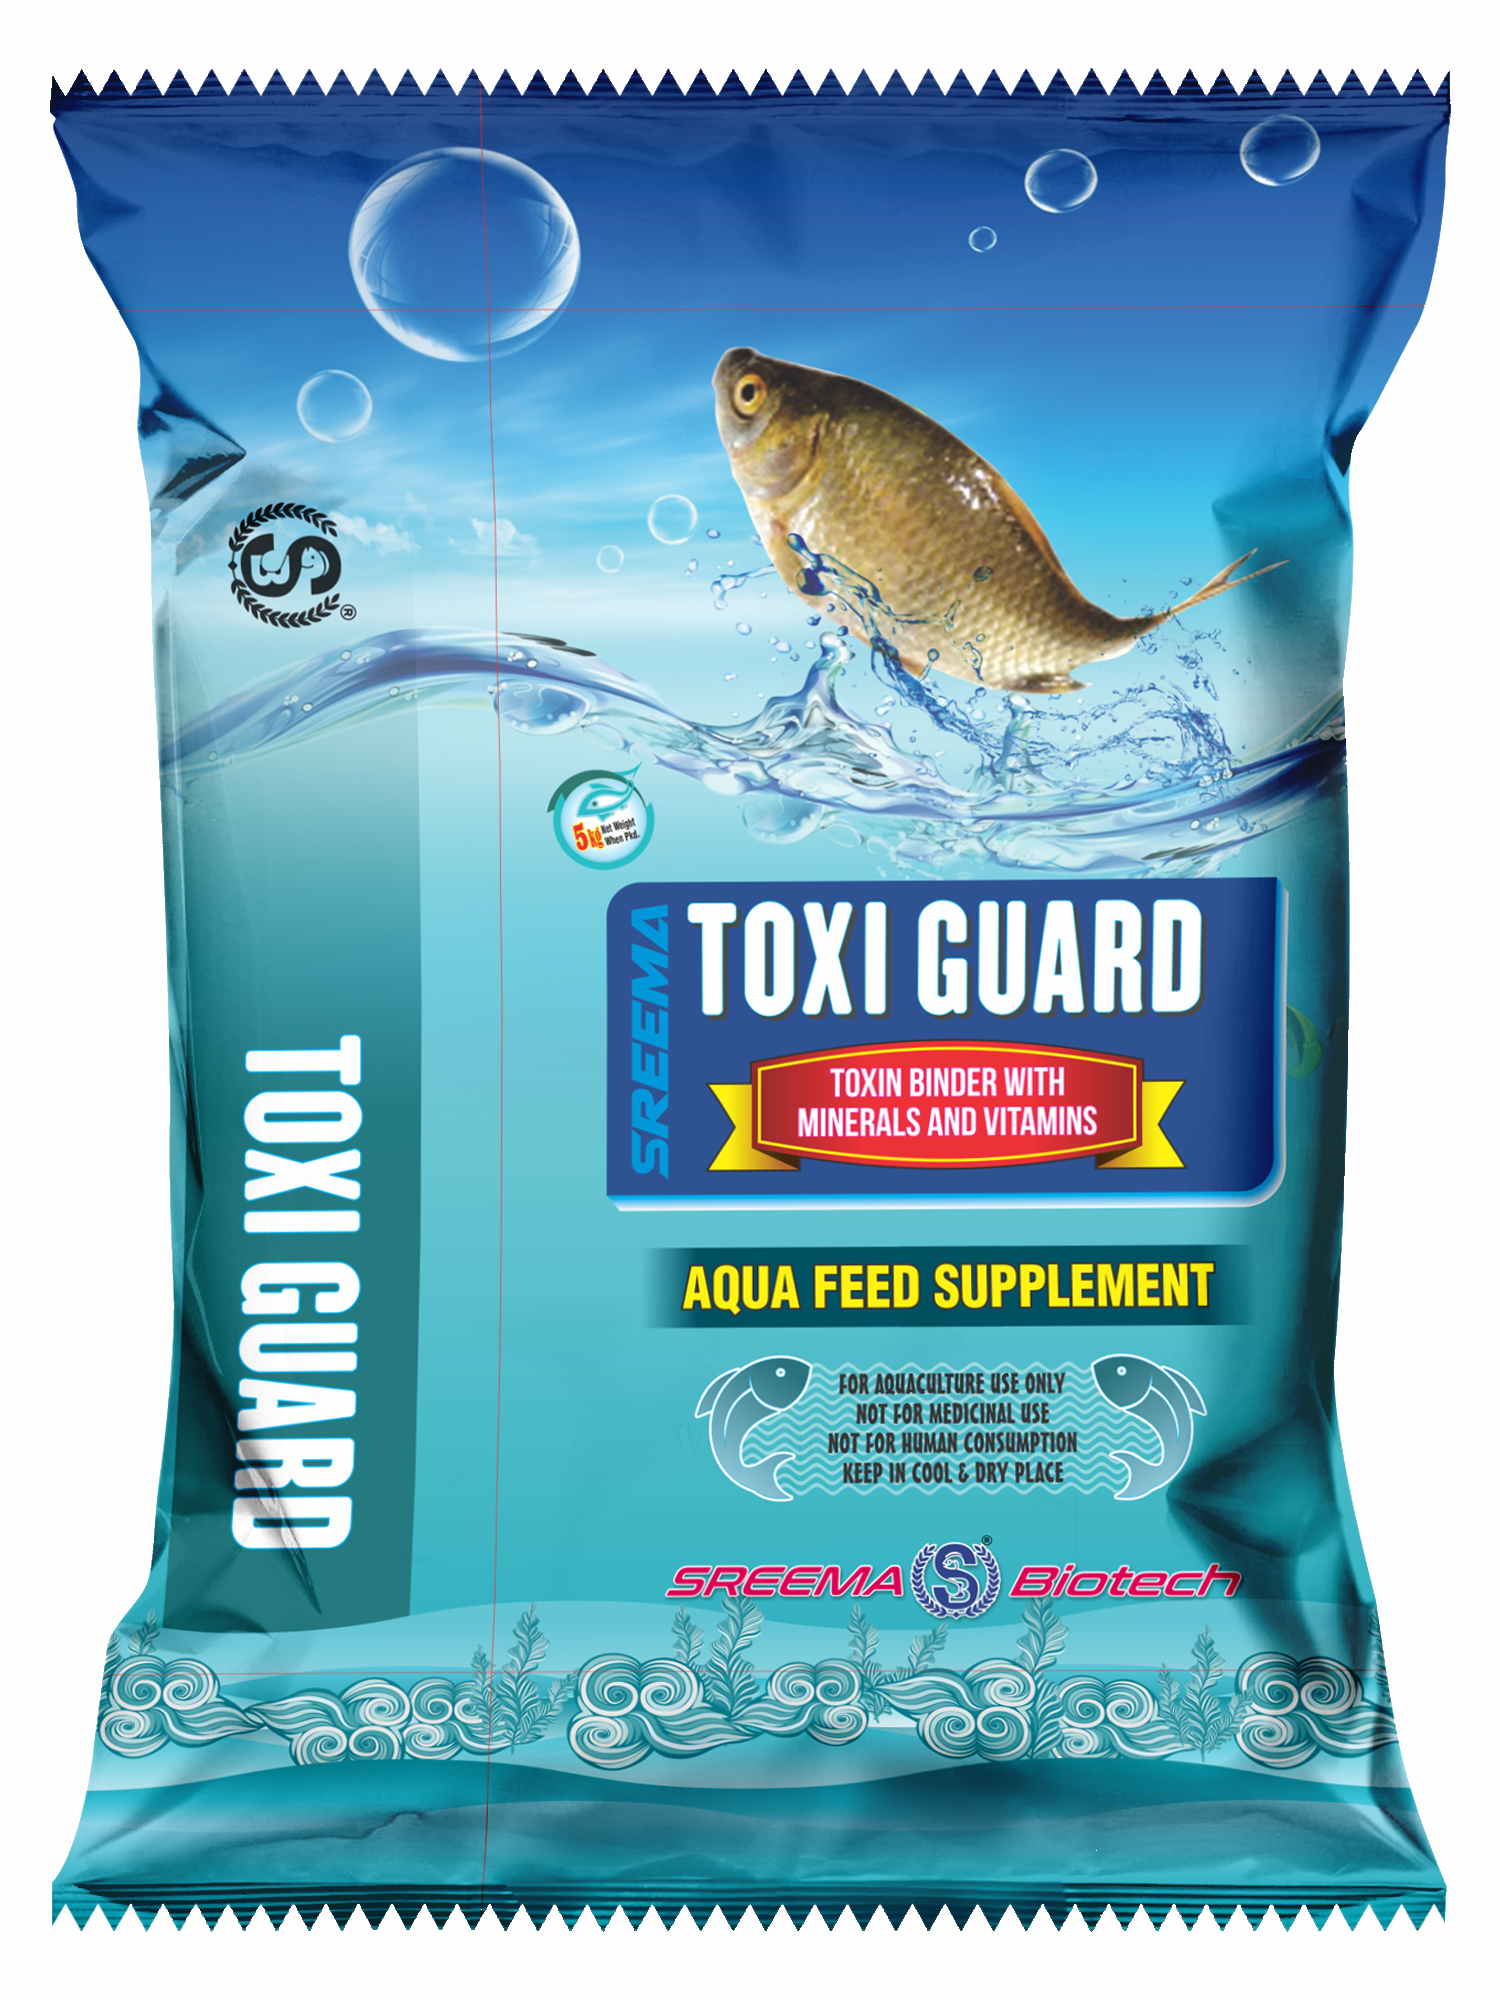 Toxi Guard product